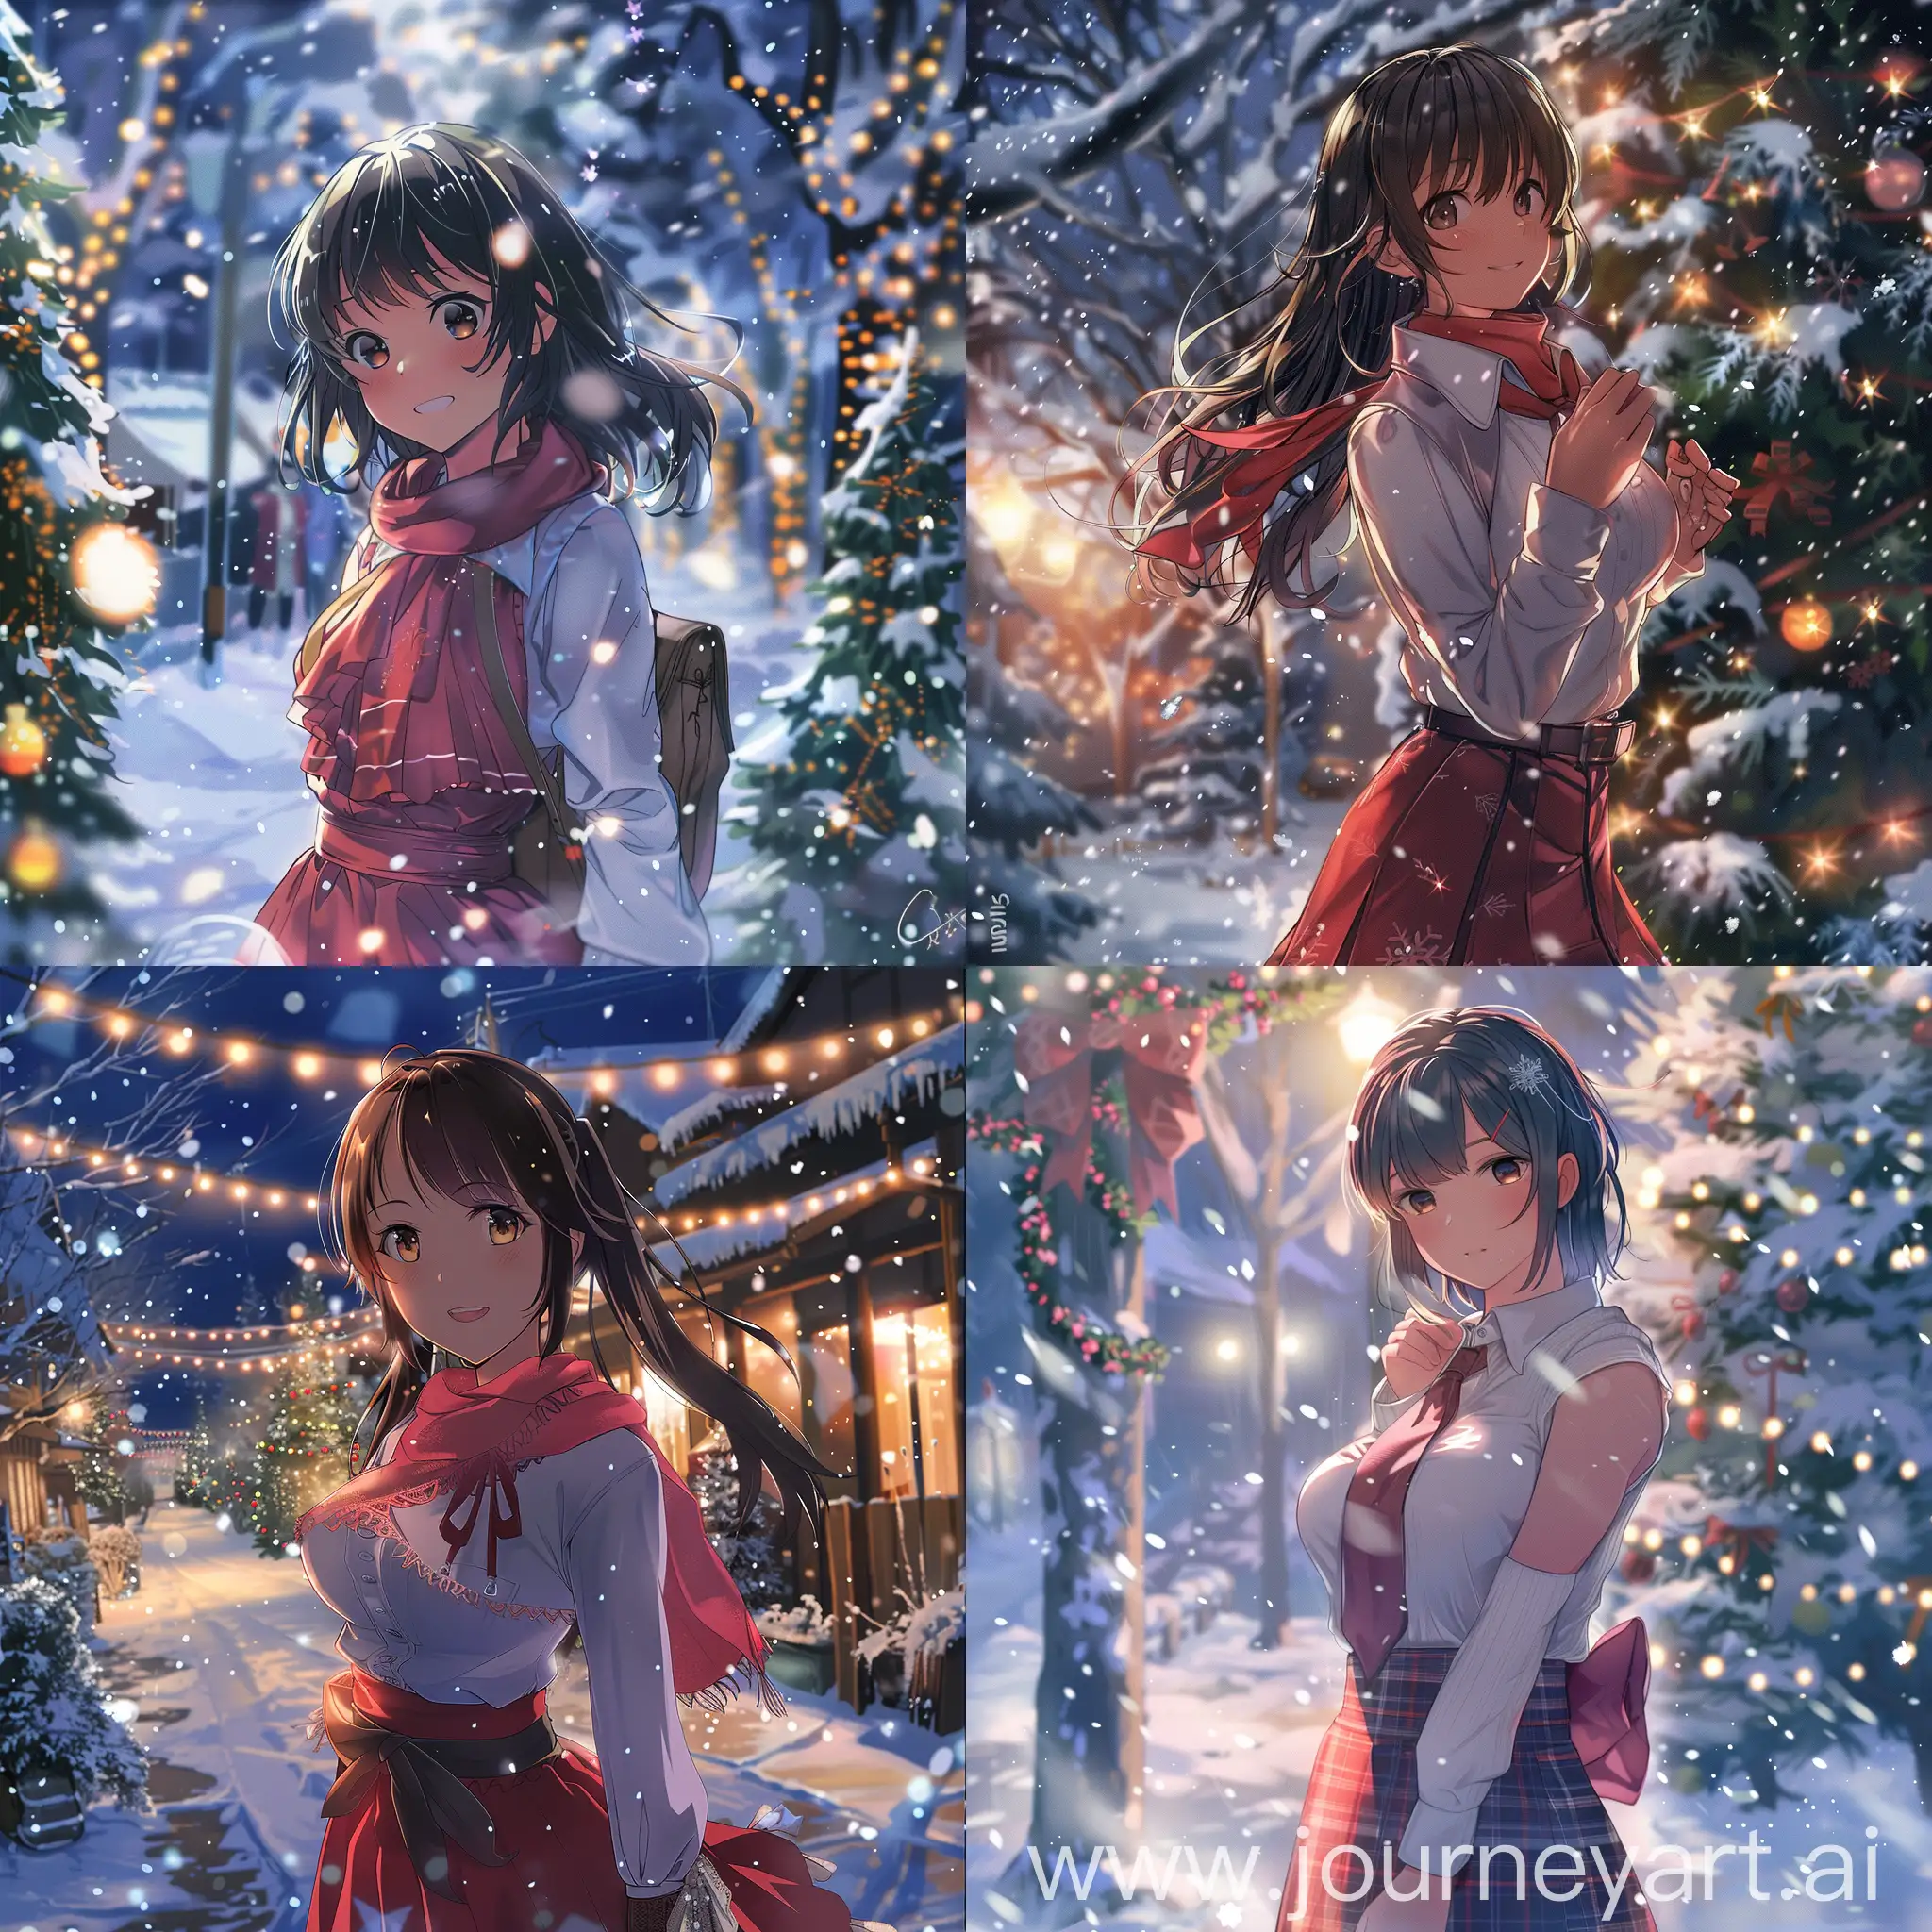 Ichinose-Honami-Christmas-Night-Portrait-in-Snowy-Outdoors